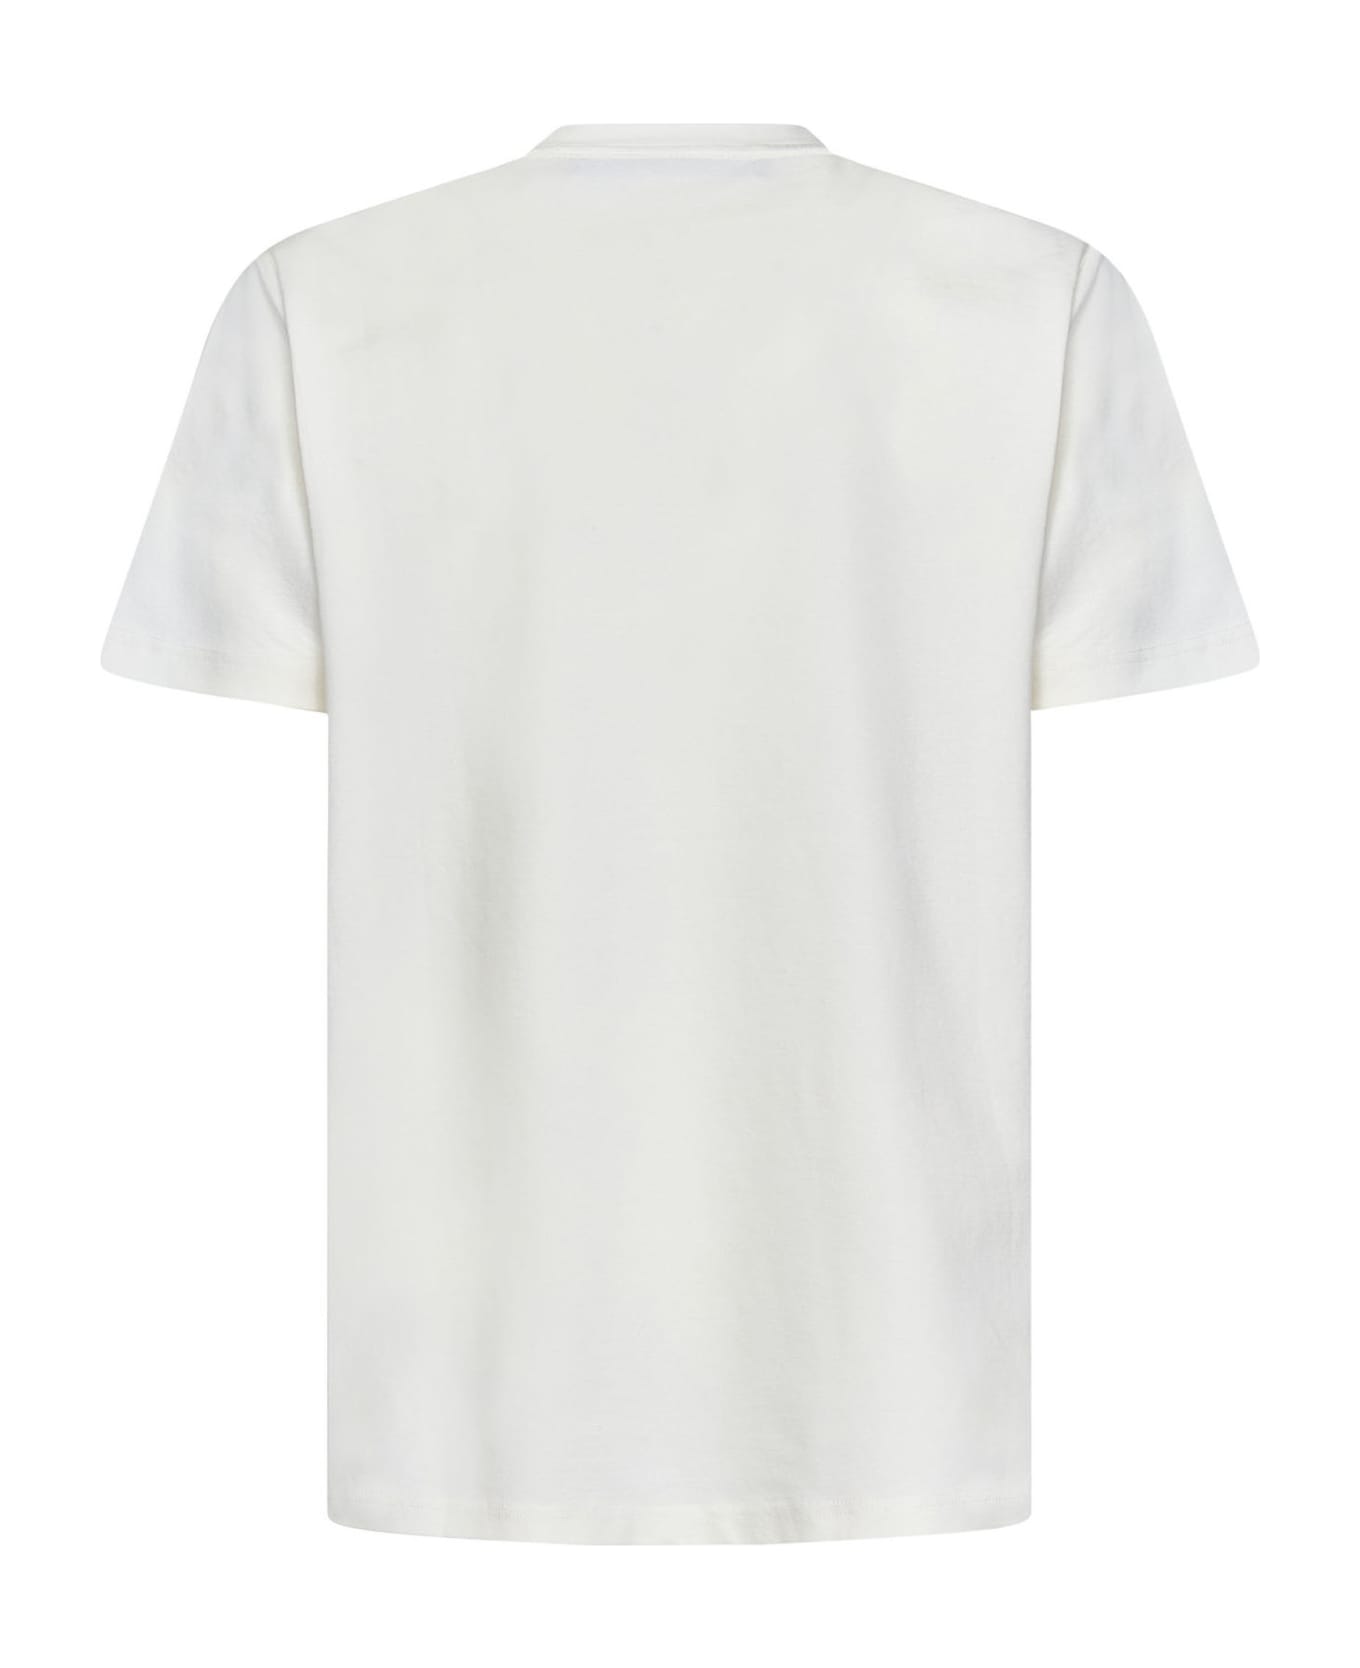 FourTwoFour on Fairfax T-shirt - White シャツ